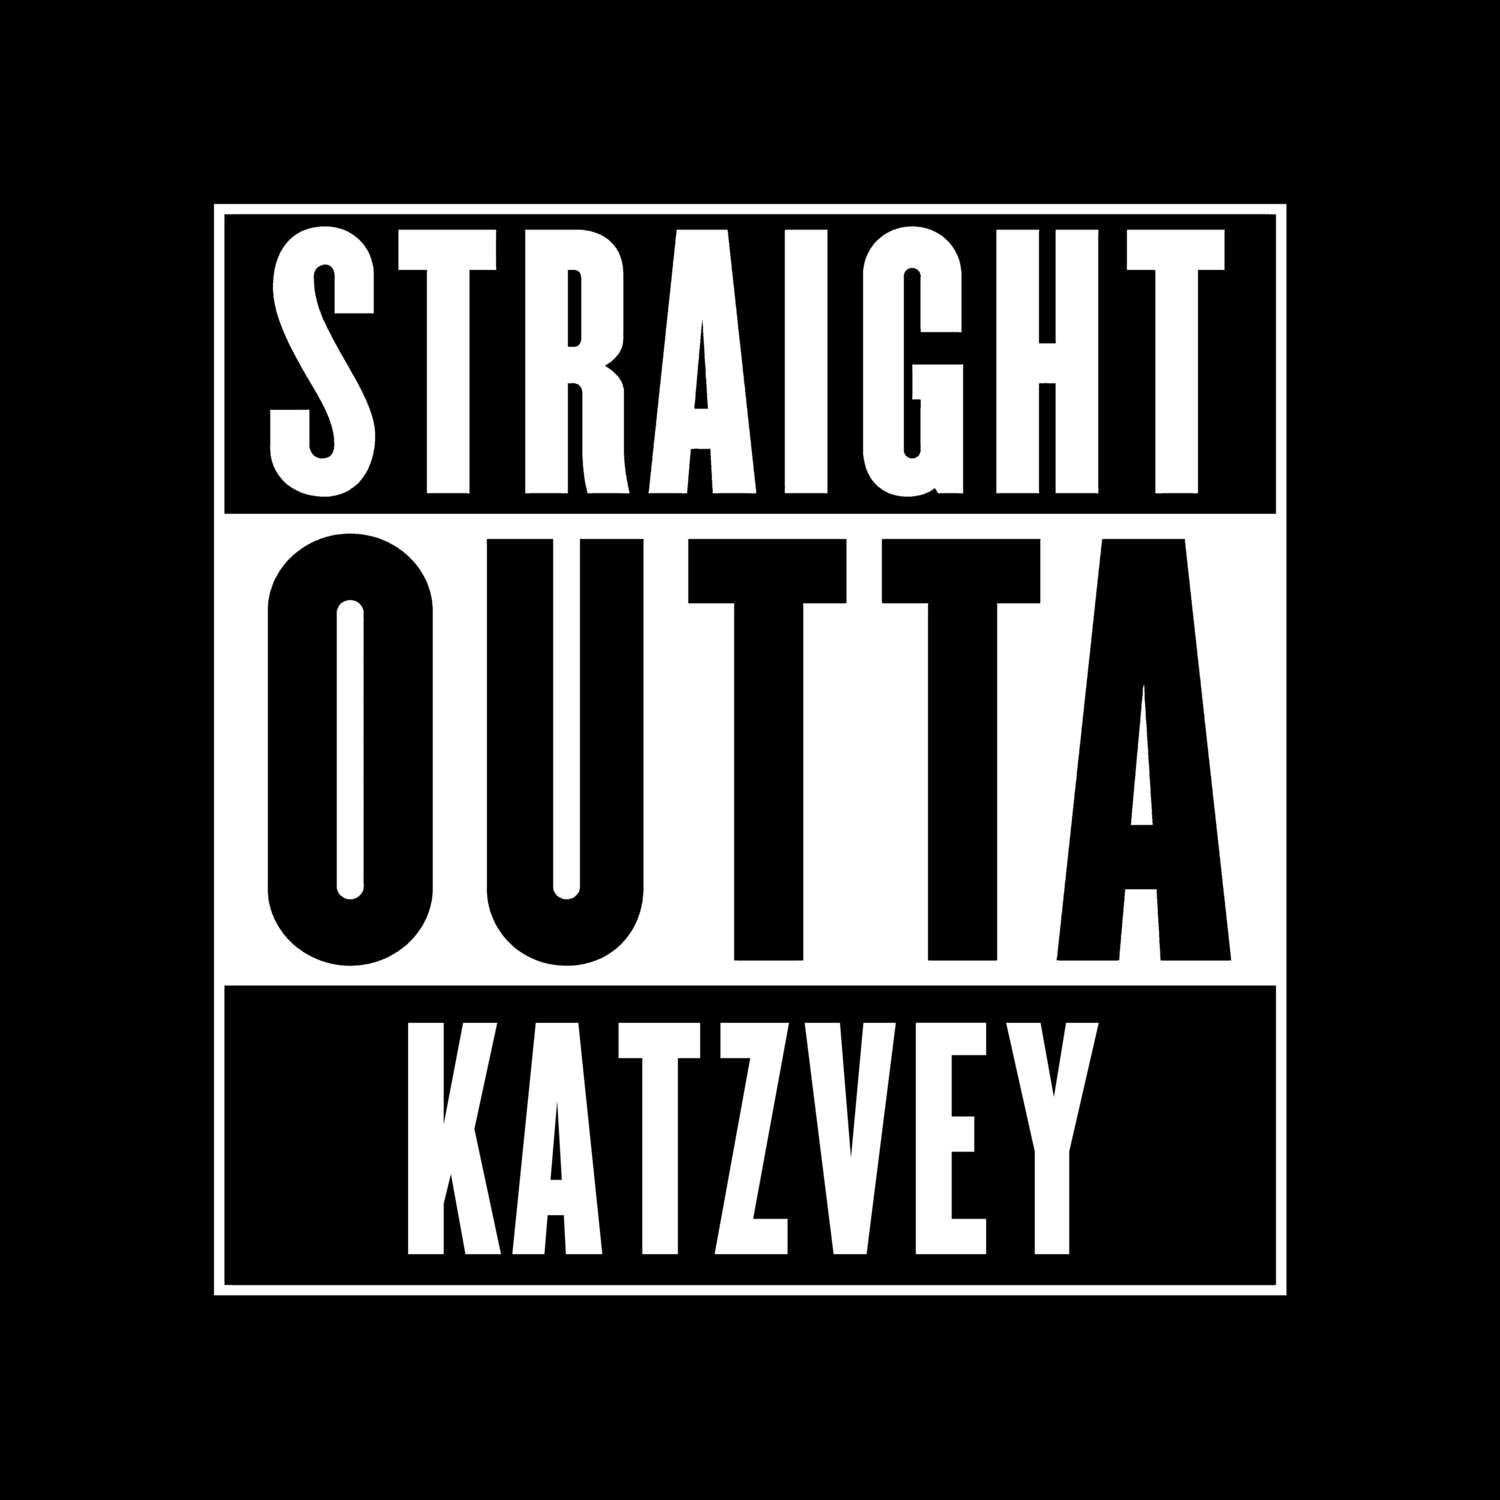 Katzvey T-Shirt »Straight Outta«